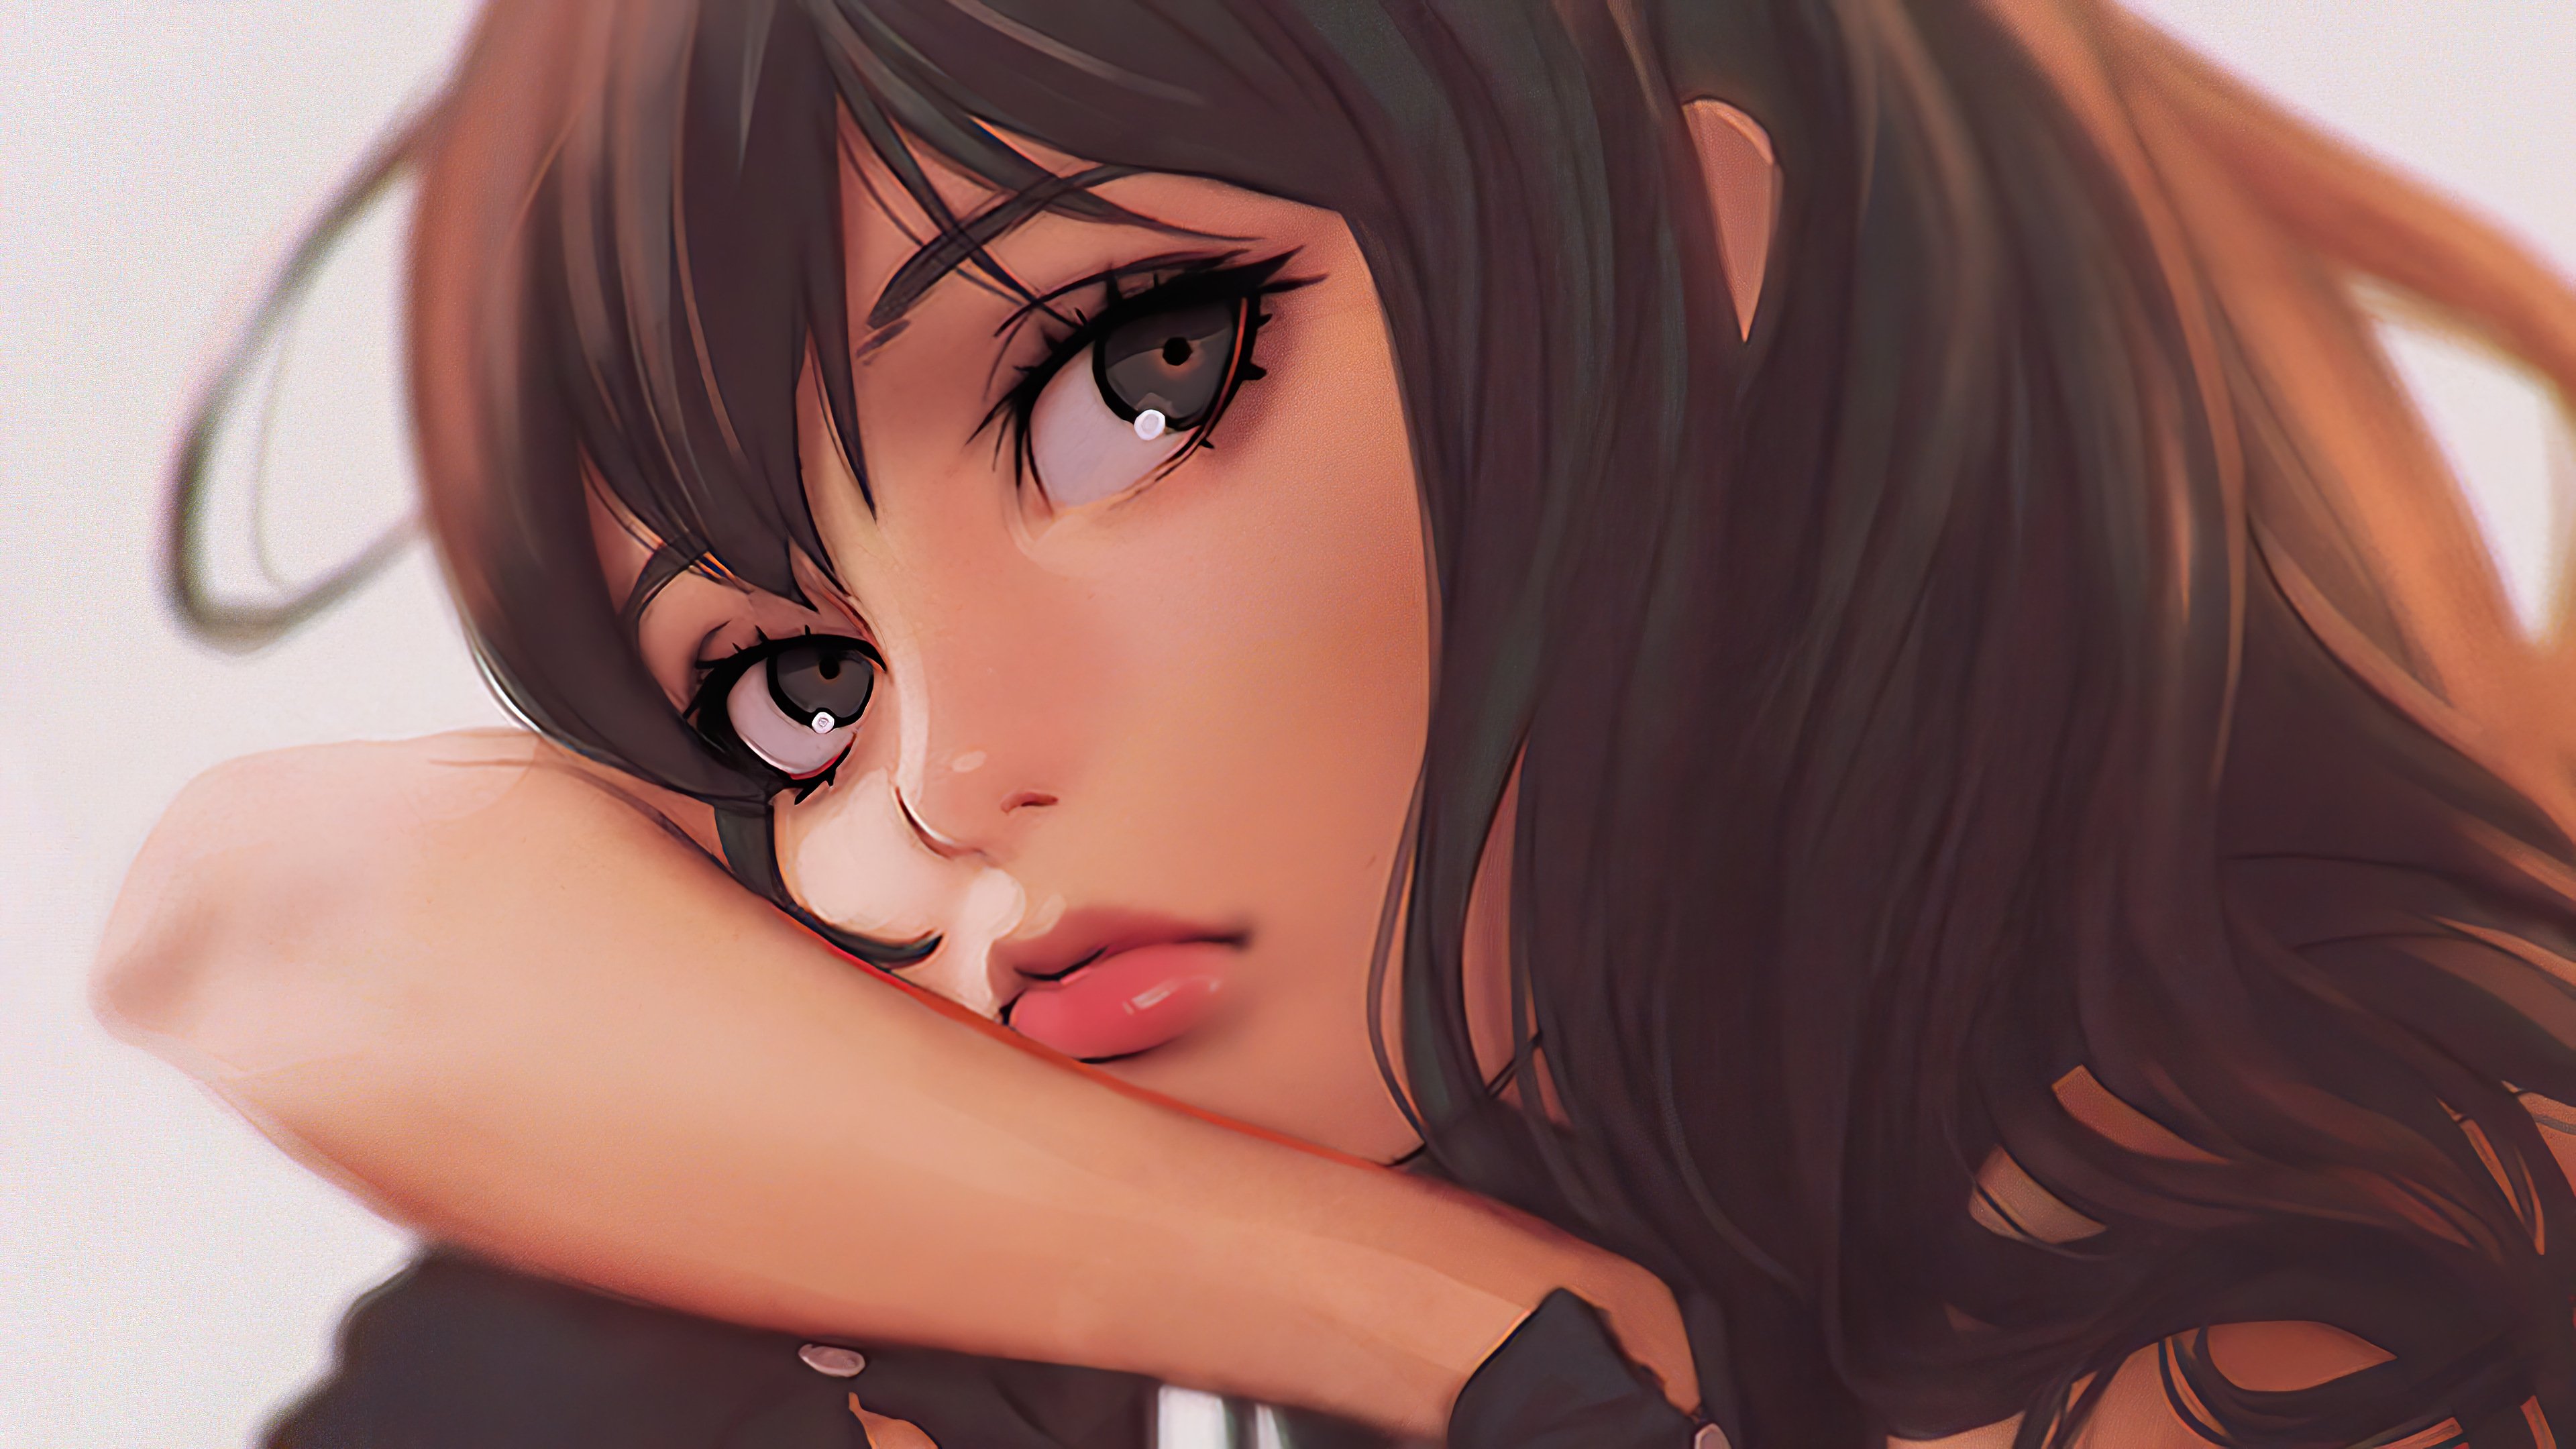 Anime Girl thinking Wallpaper 4k Ultra HD ID:4699